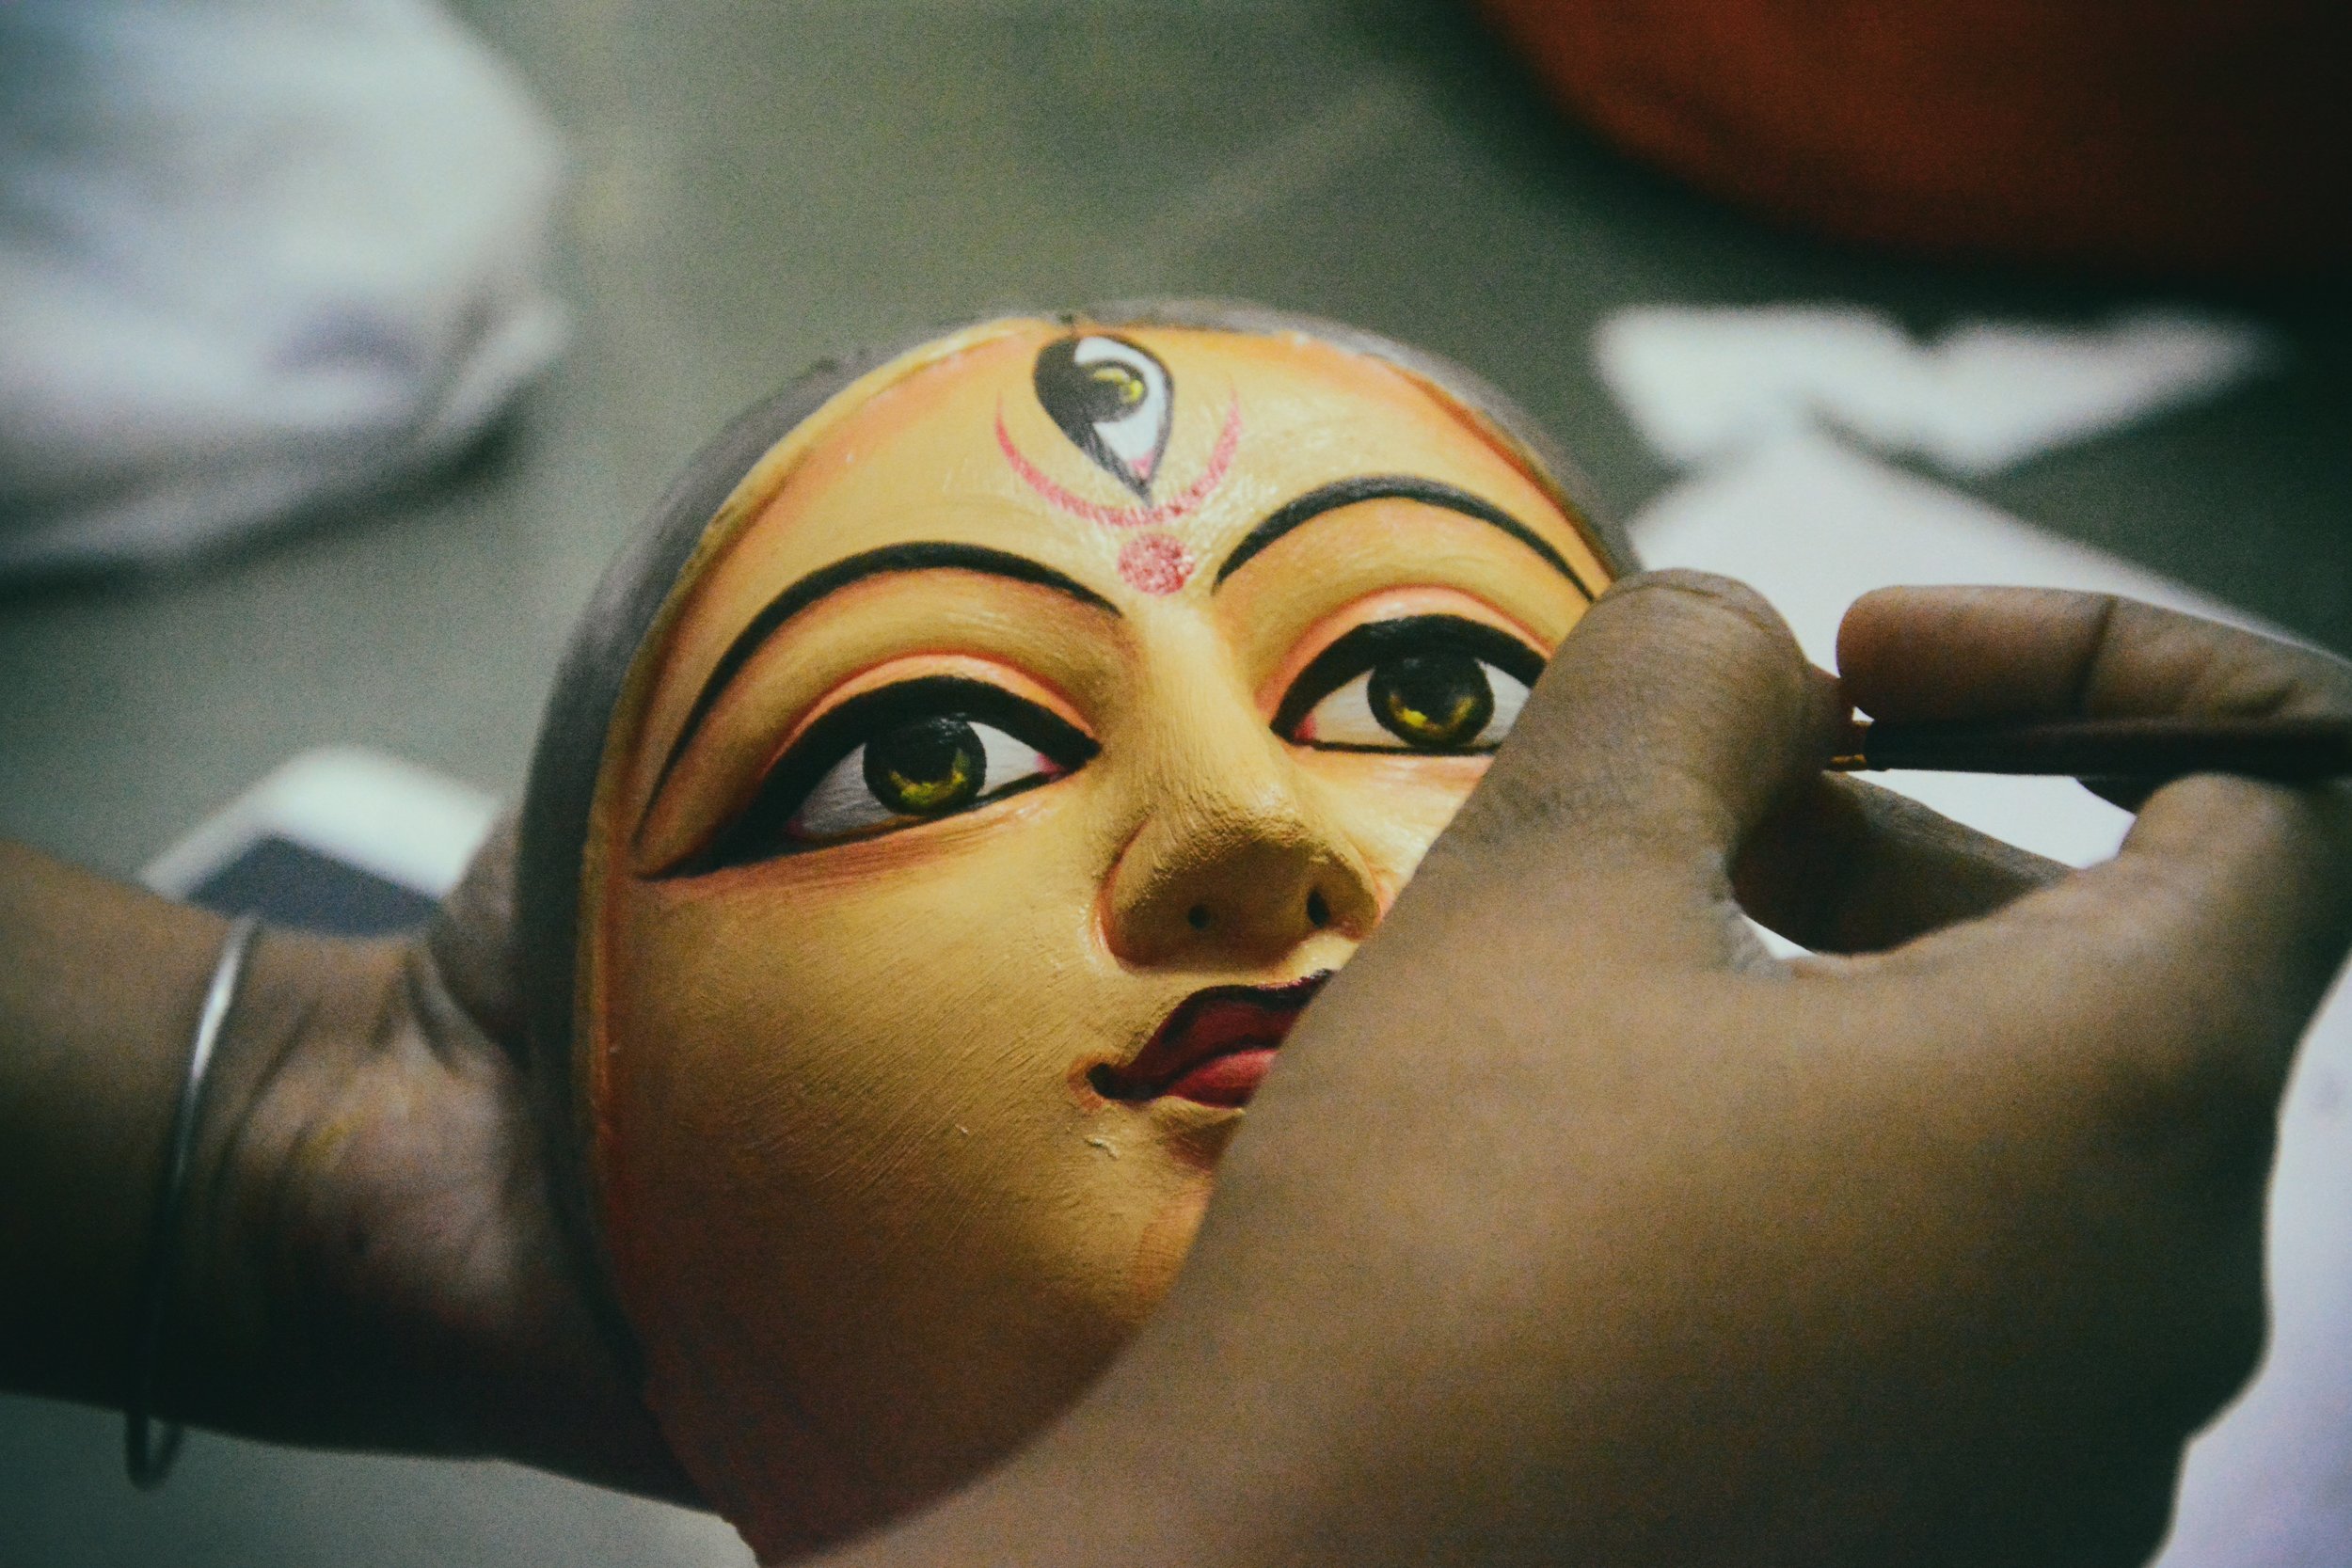 Copy of Idol sculpting in Kumartuli, Kolkata